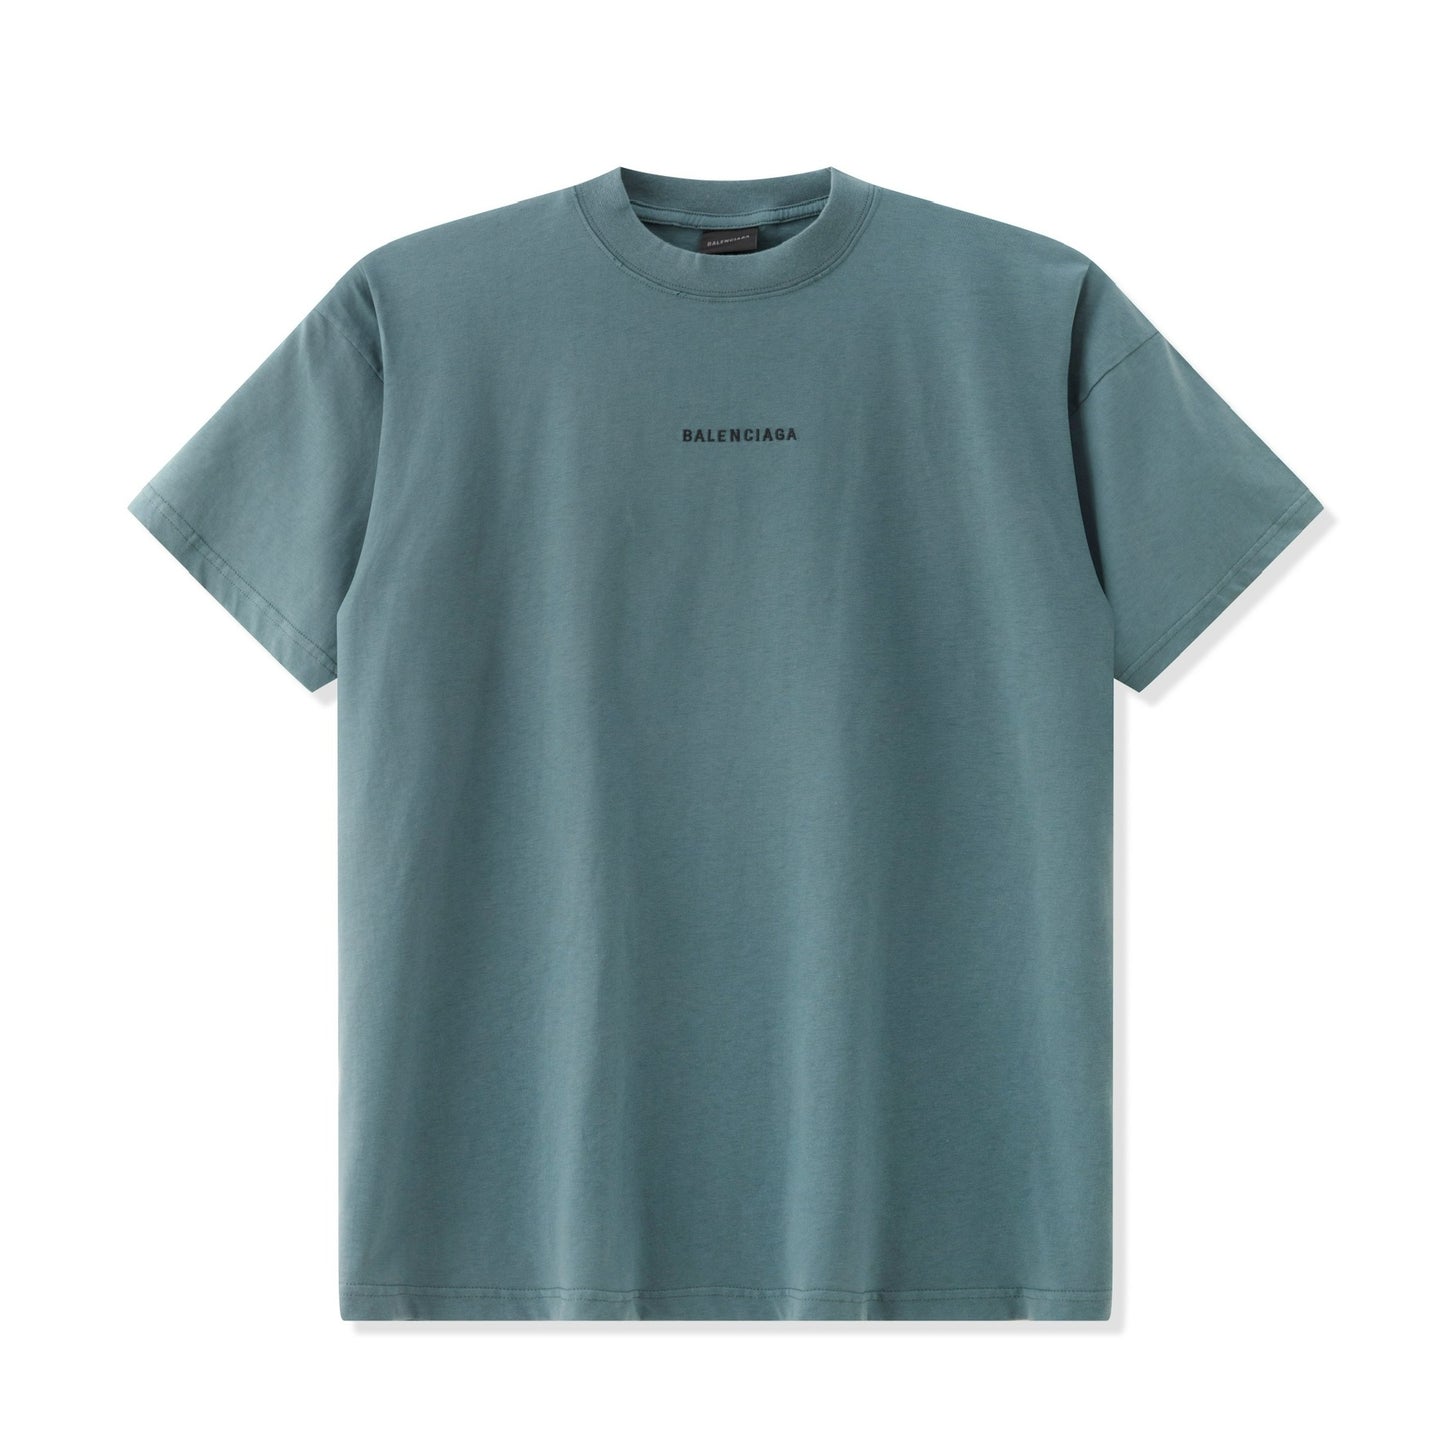 Grey,Green,Blue and Khaki T-shirt